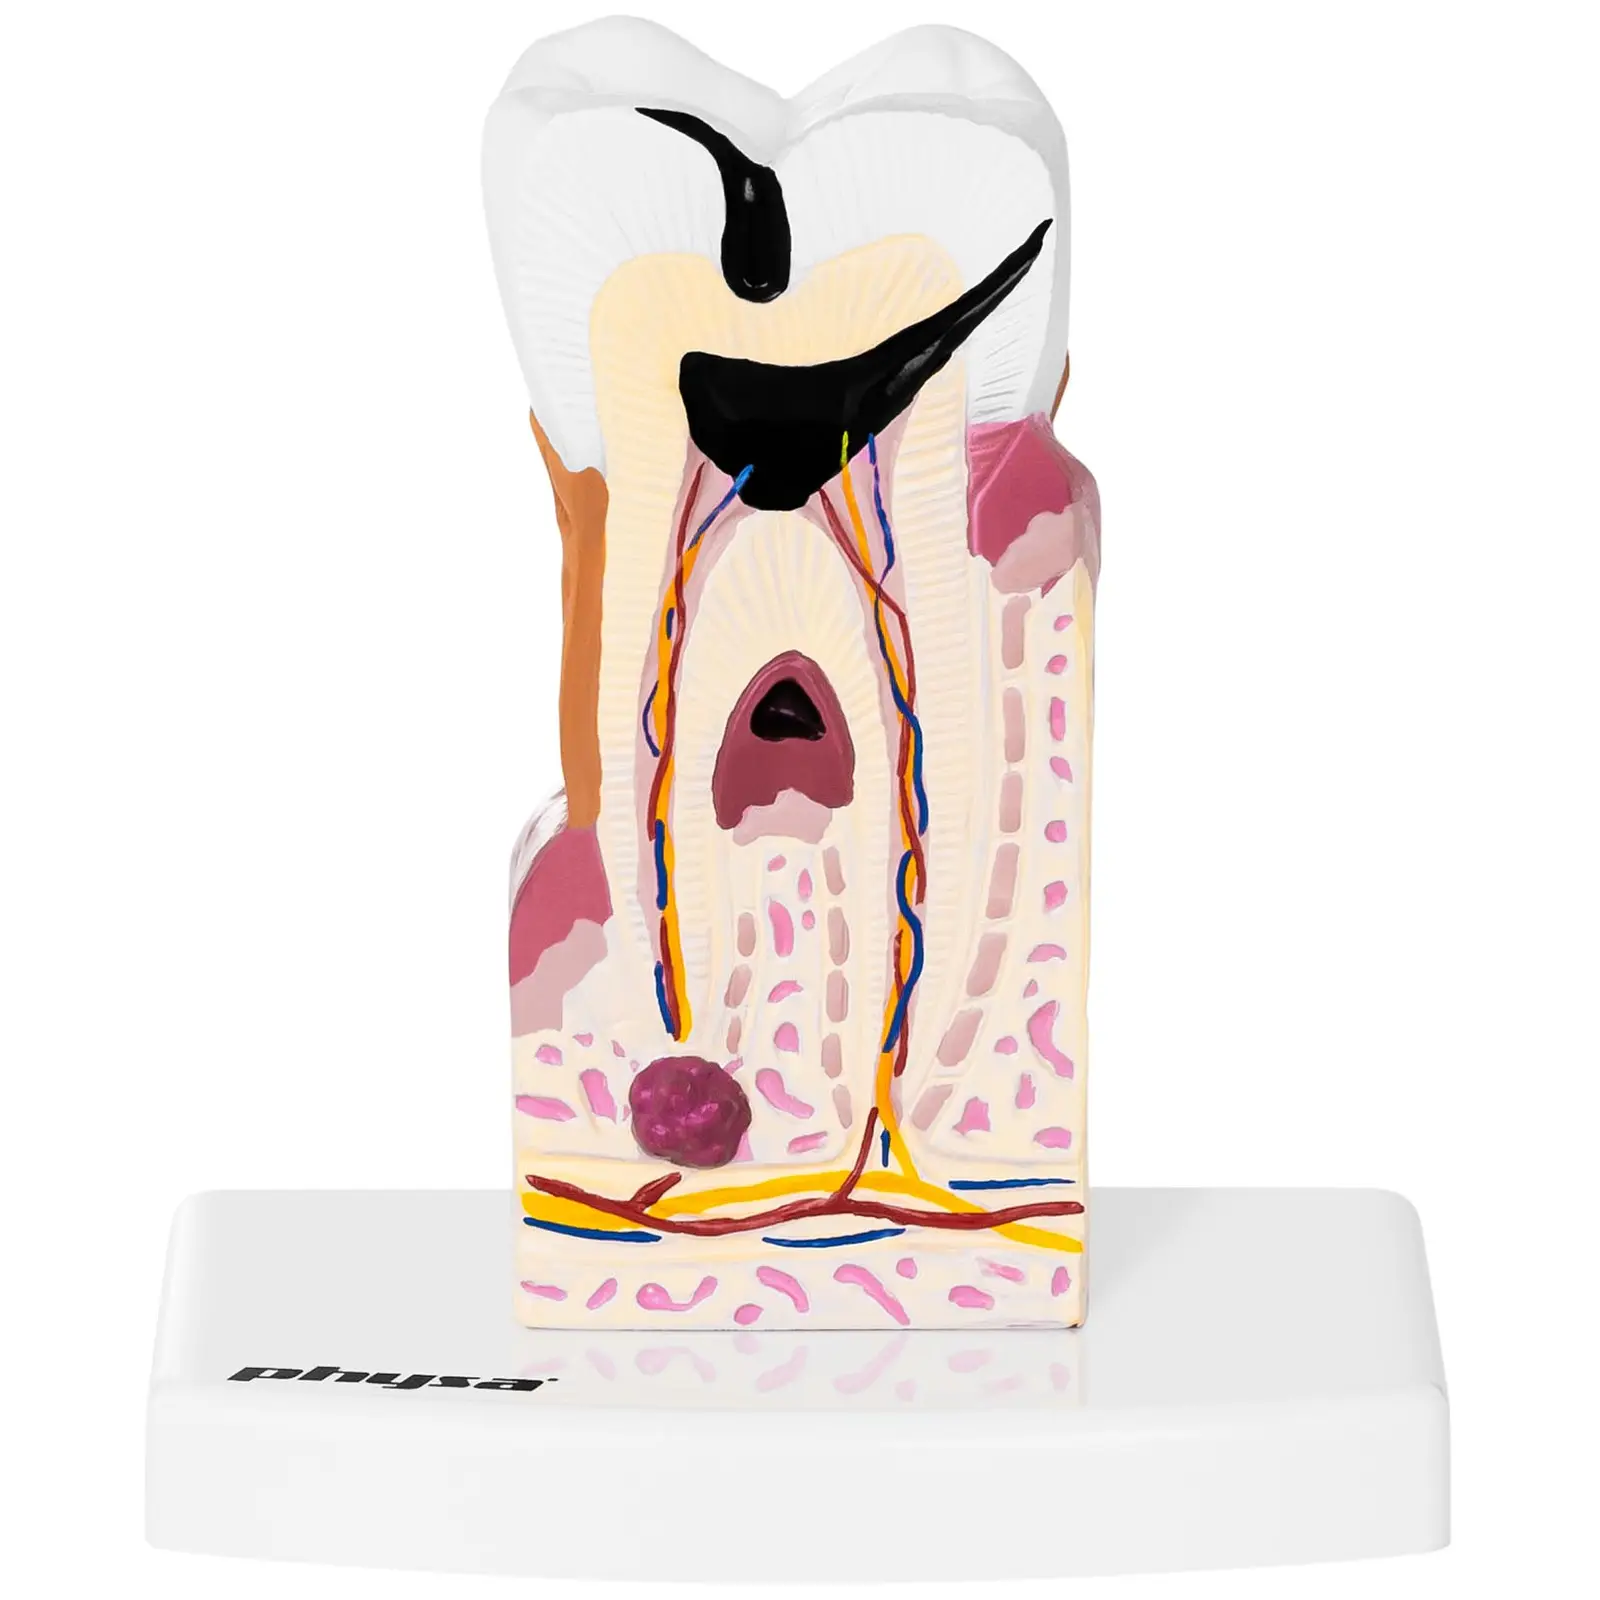 Maquette anatomique de la dentition humaine - Molaire malade